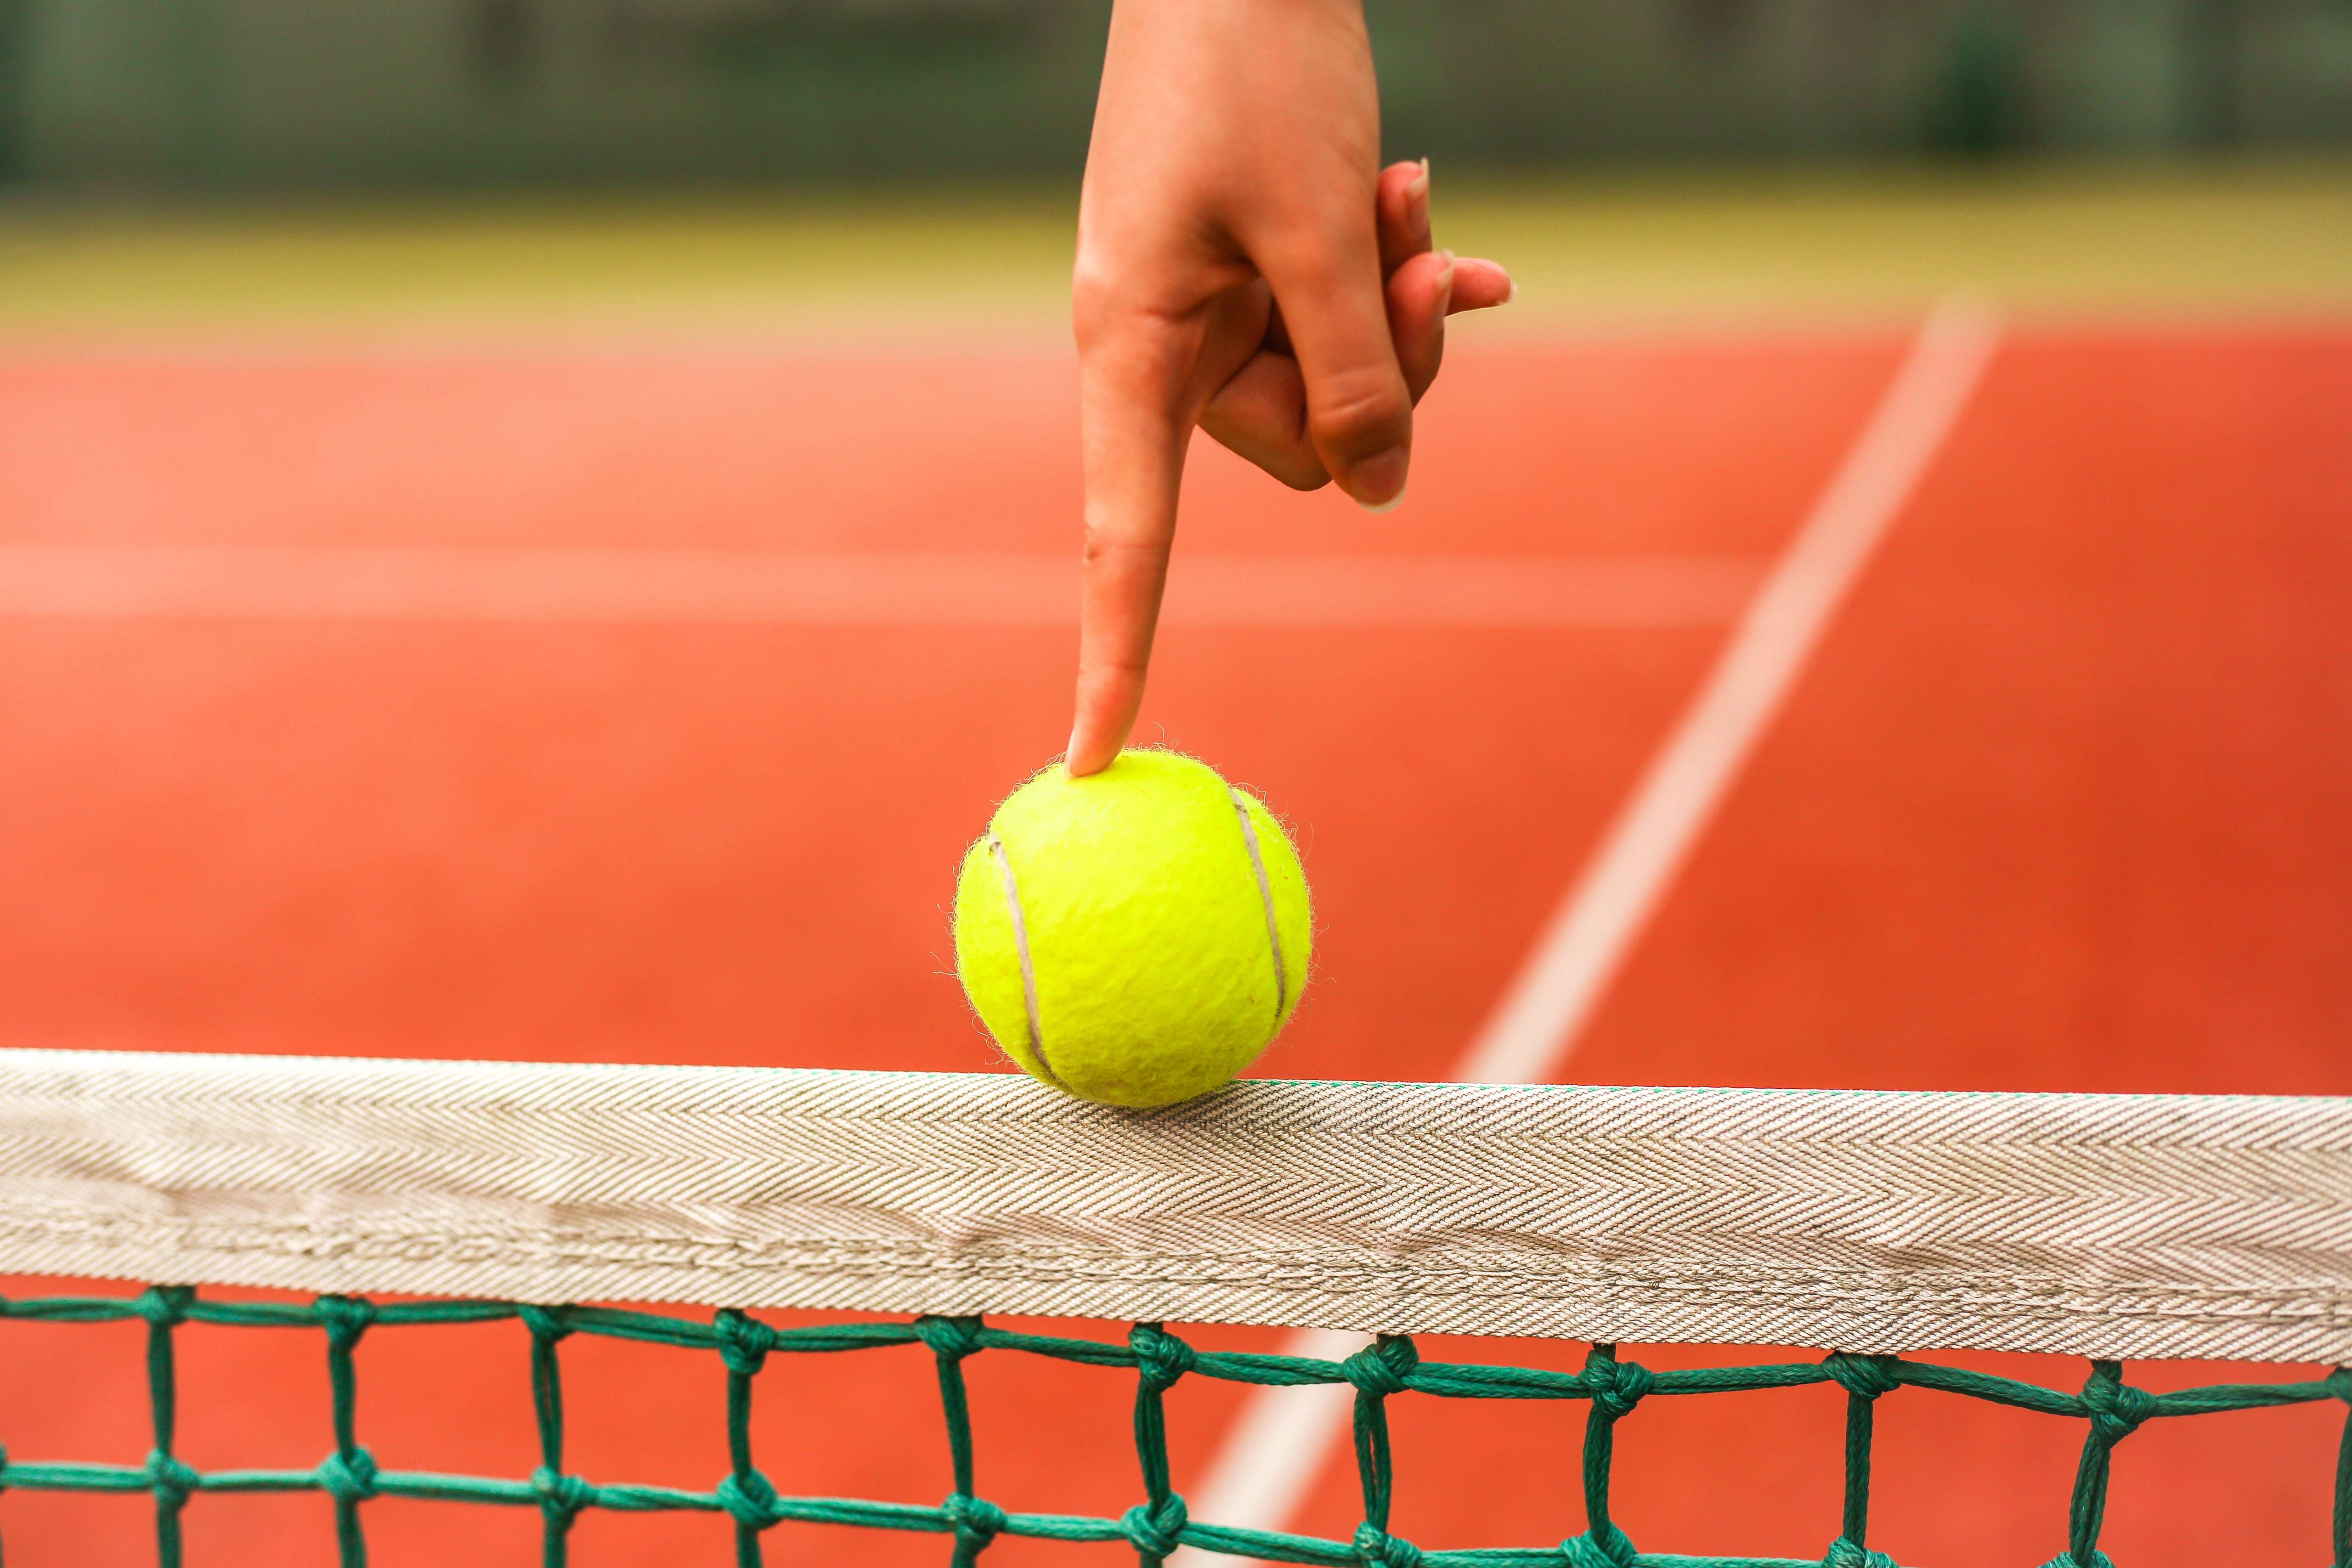 Tennisbal balancerend op een tennisnet